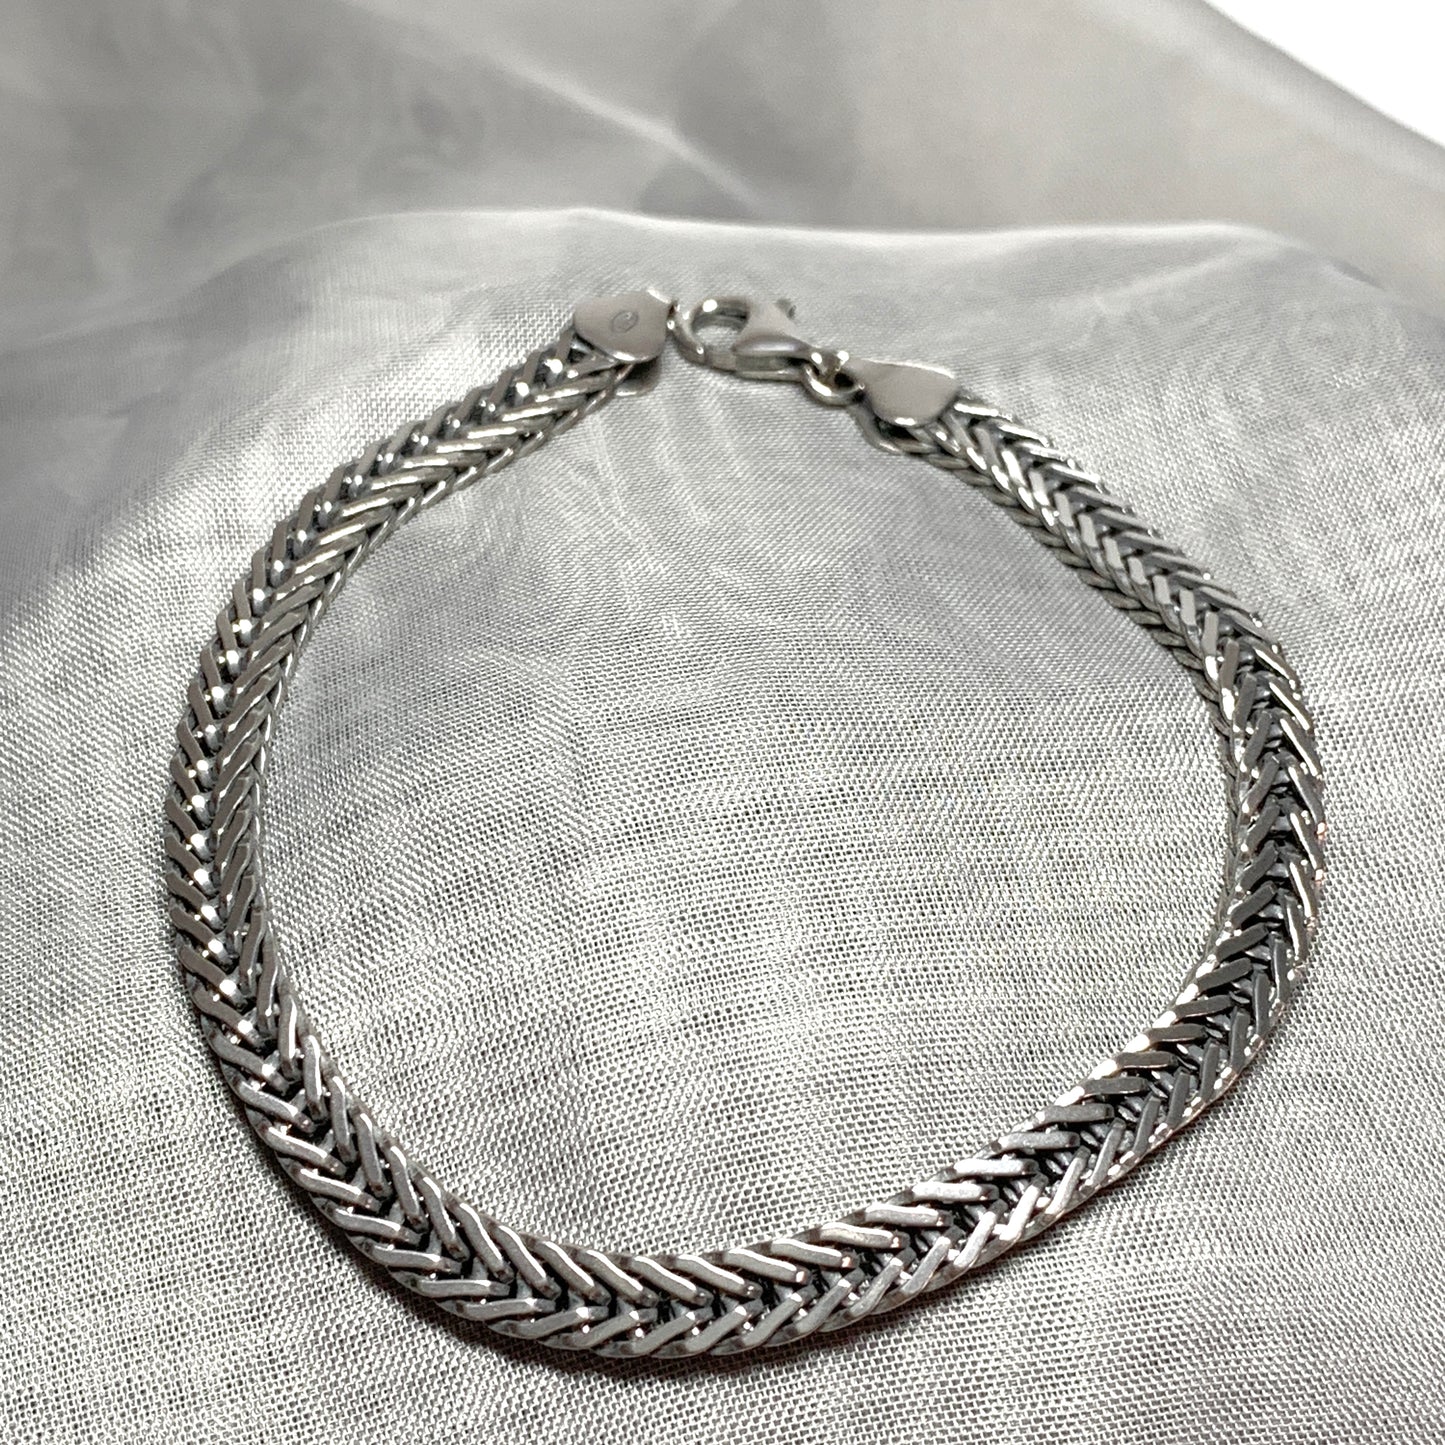 Men's sterling silver flat Spiga bracelet 8.75 inches